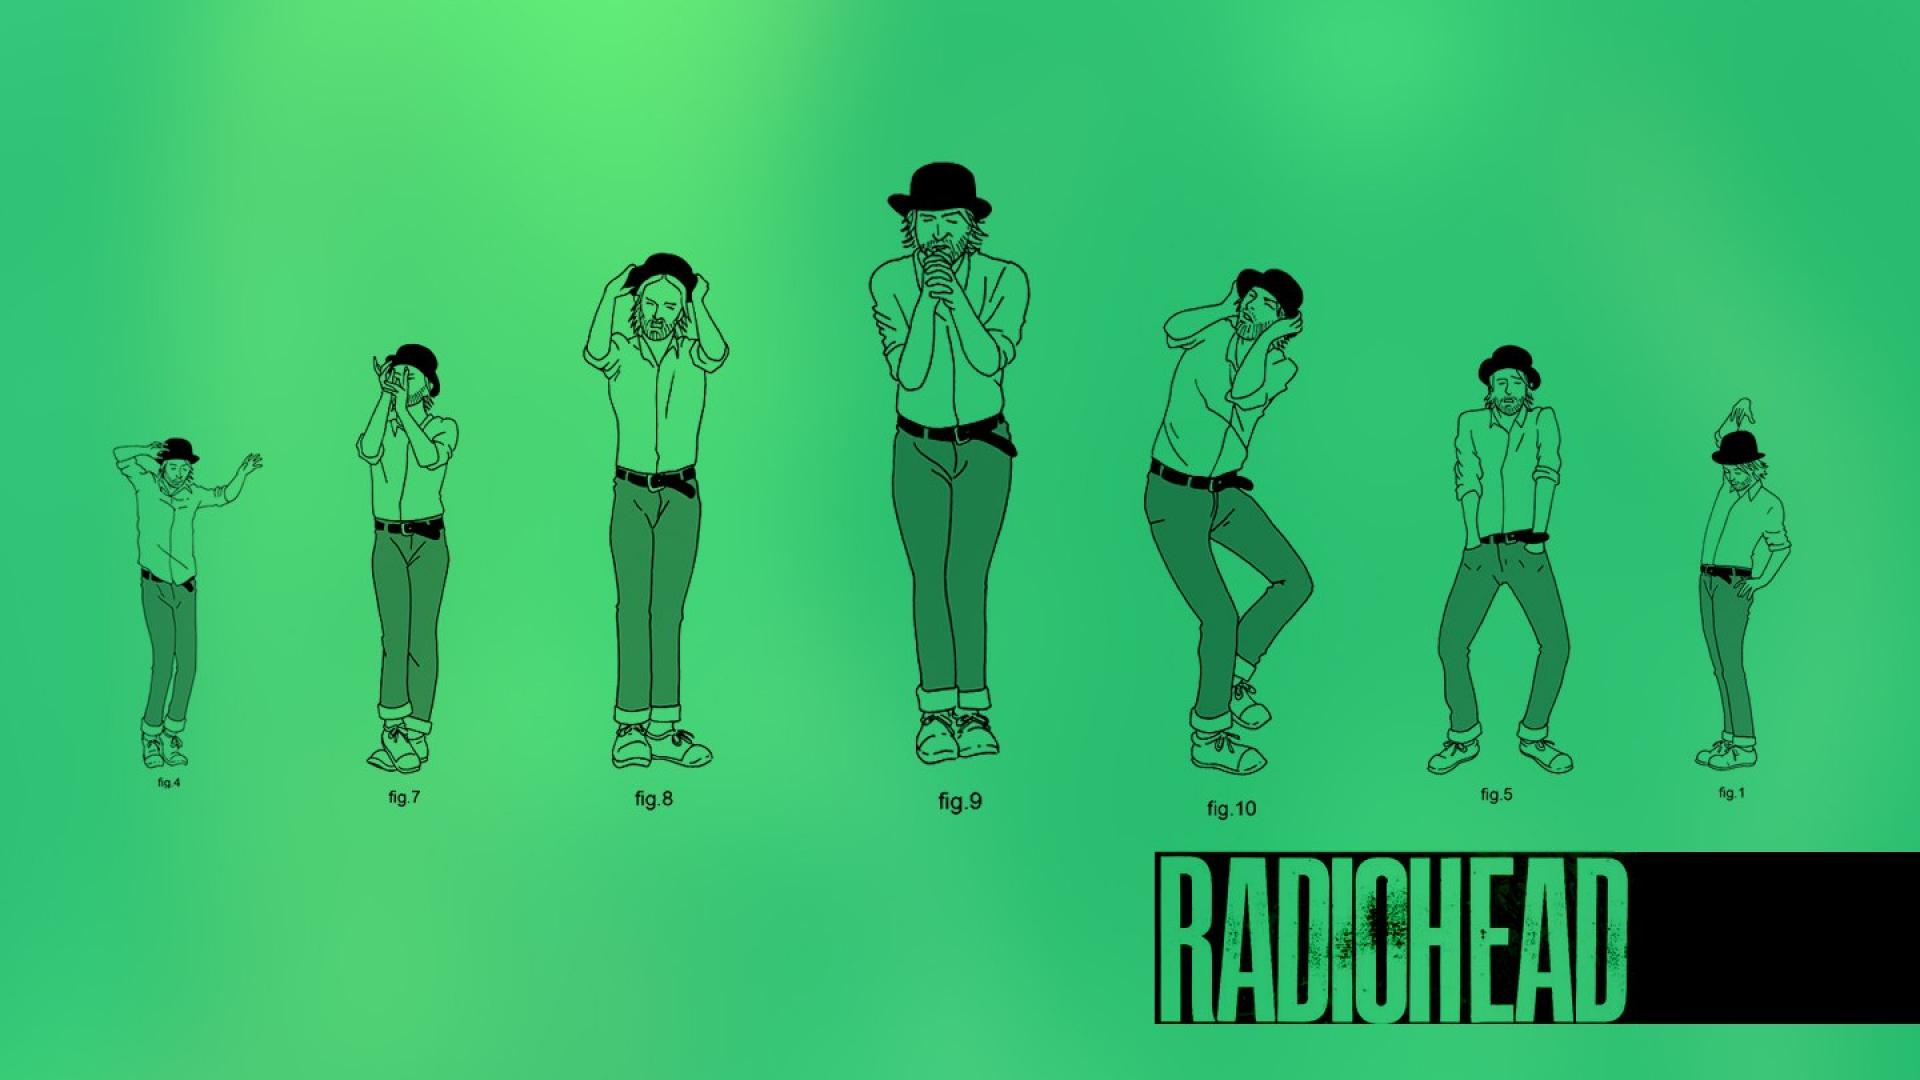 Radiohead wallpaper 1440x900 - (#40531) - High Quality and ...